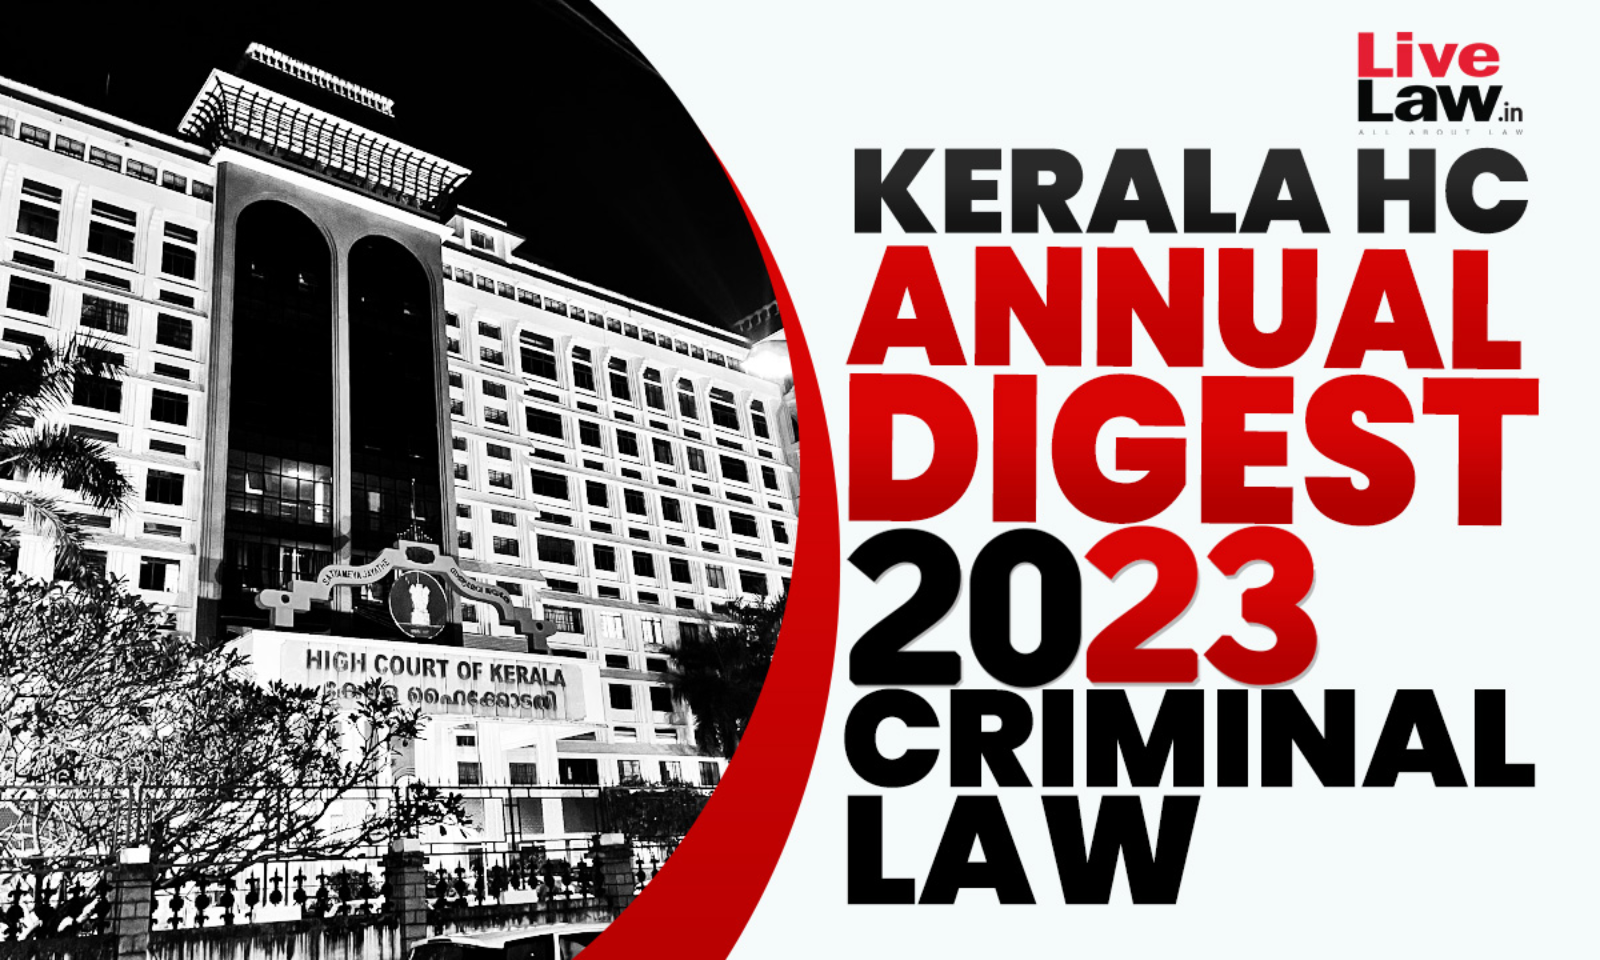 Sudha Sudhir Vishnu Priya Sex Videos Romance - Kerala High Court Annual Digest 2023: Criminal Law